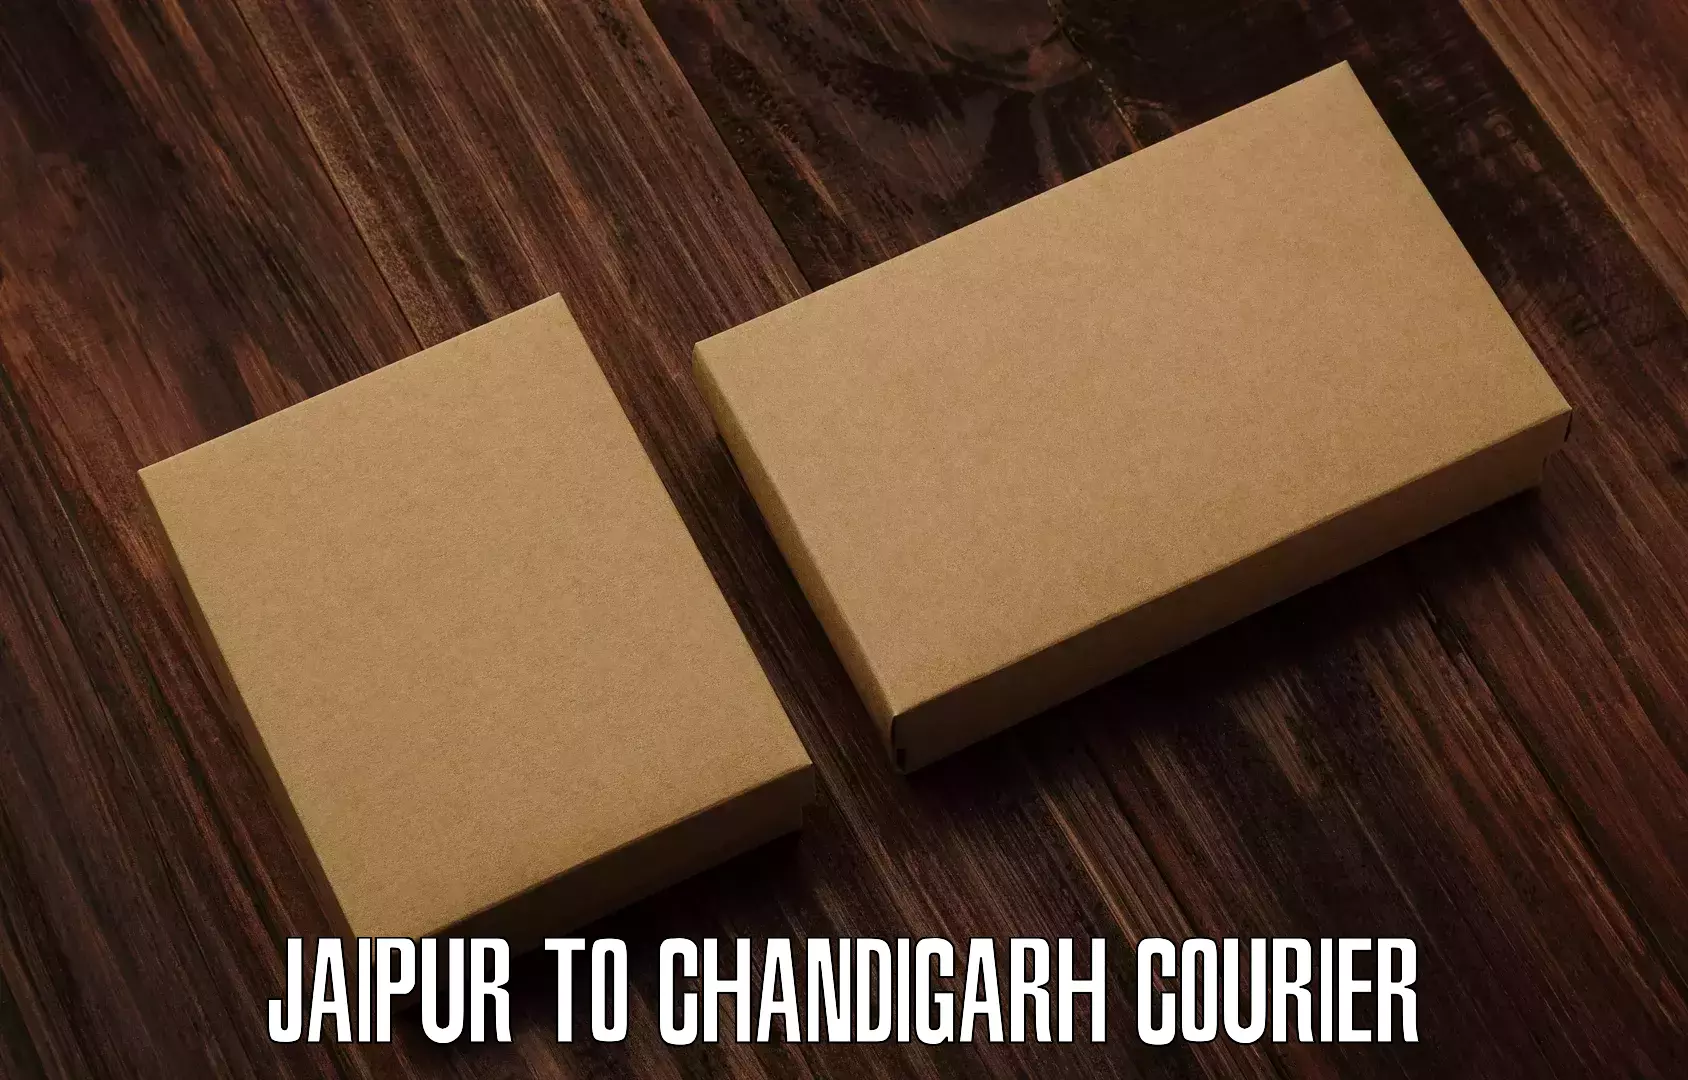 Global logistics network Jaipur to Chandigarh